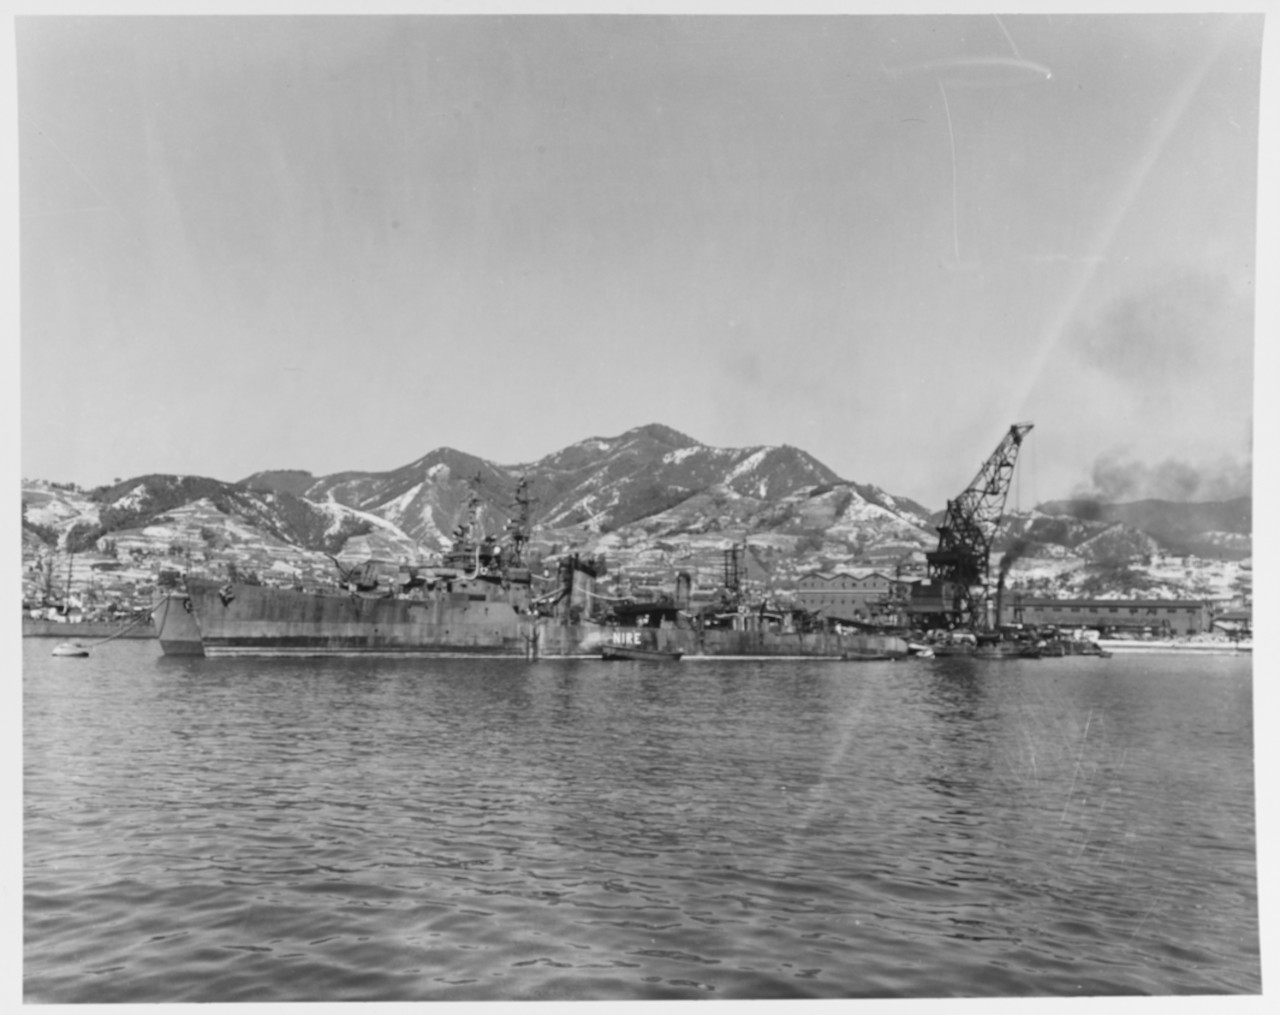 NIRE (Japanese destroyer, 1944)